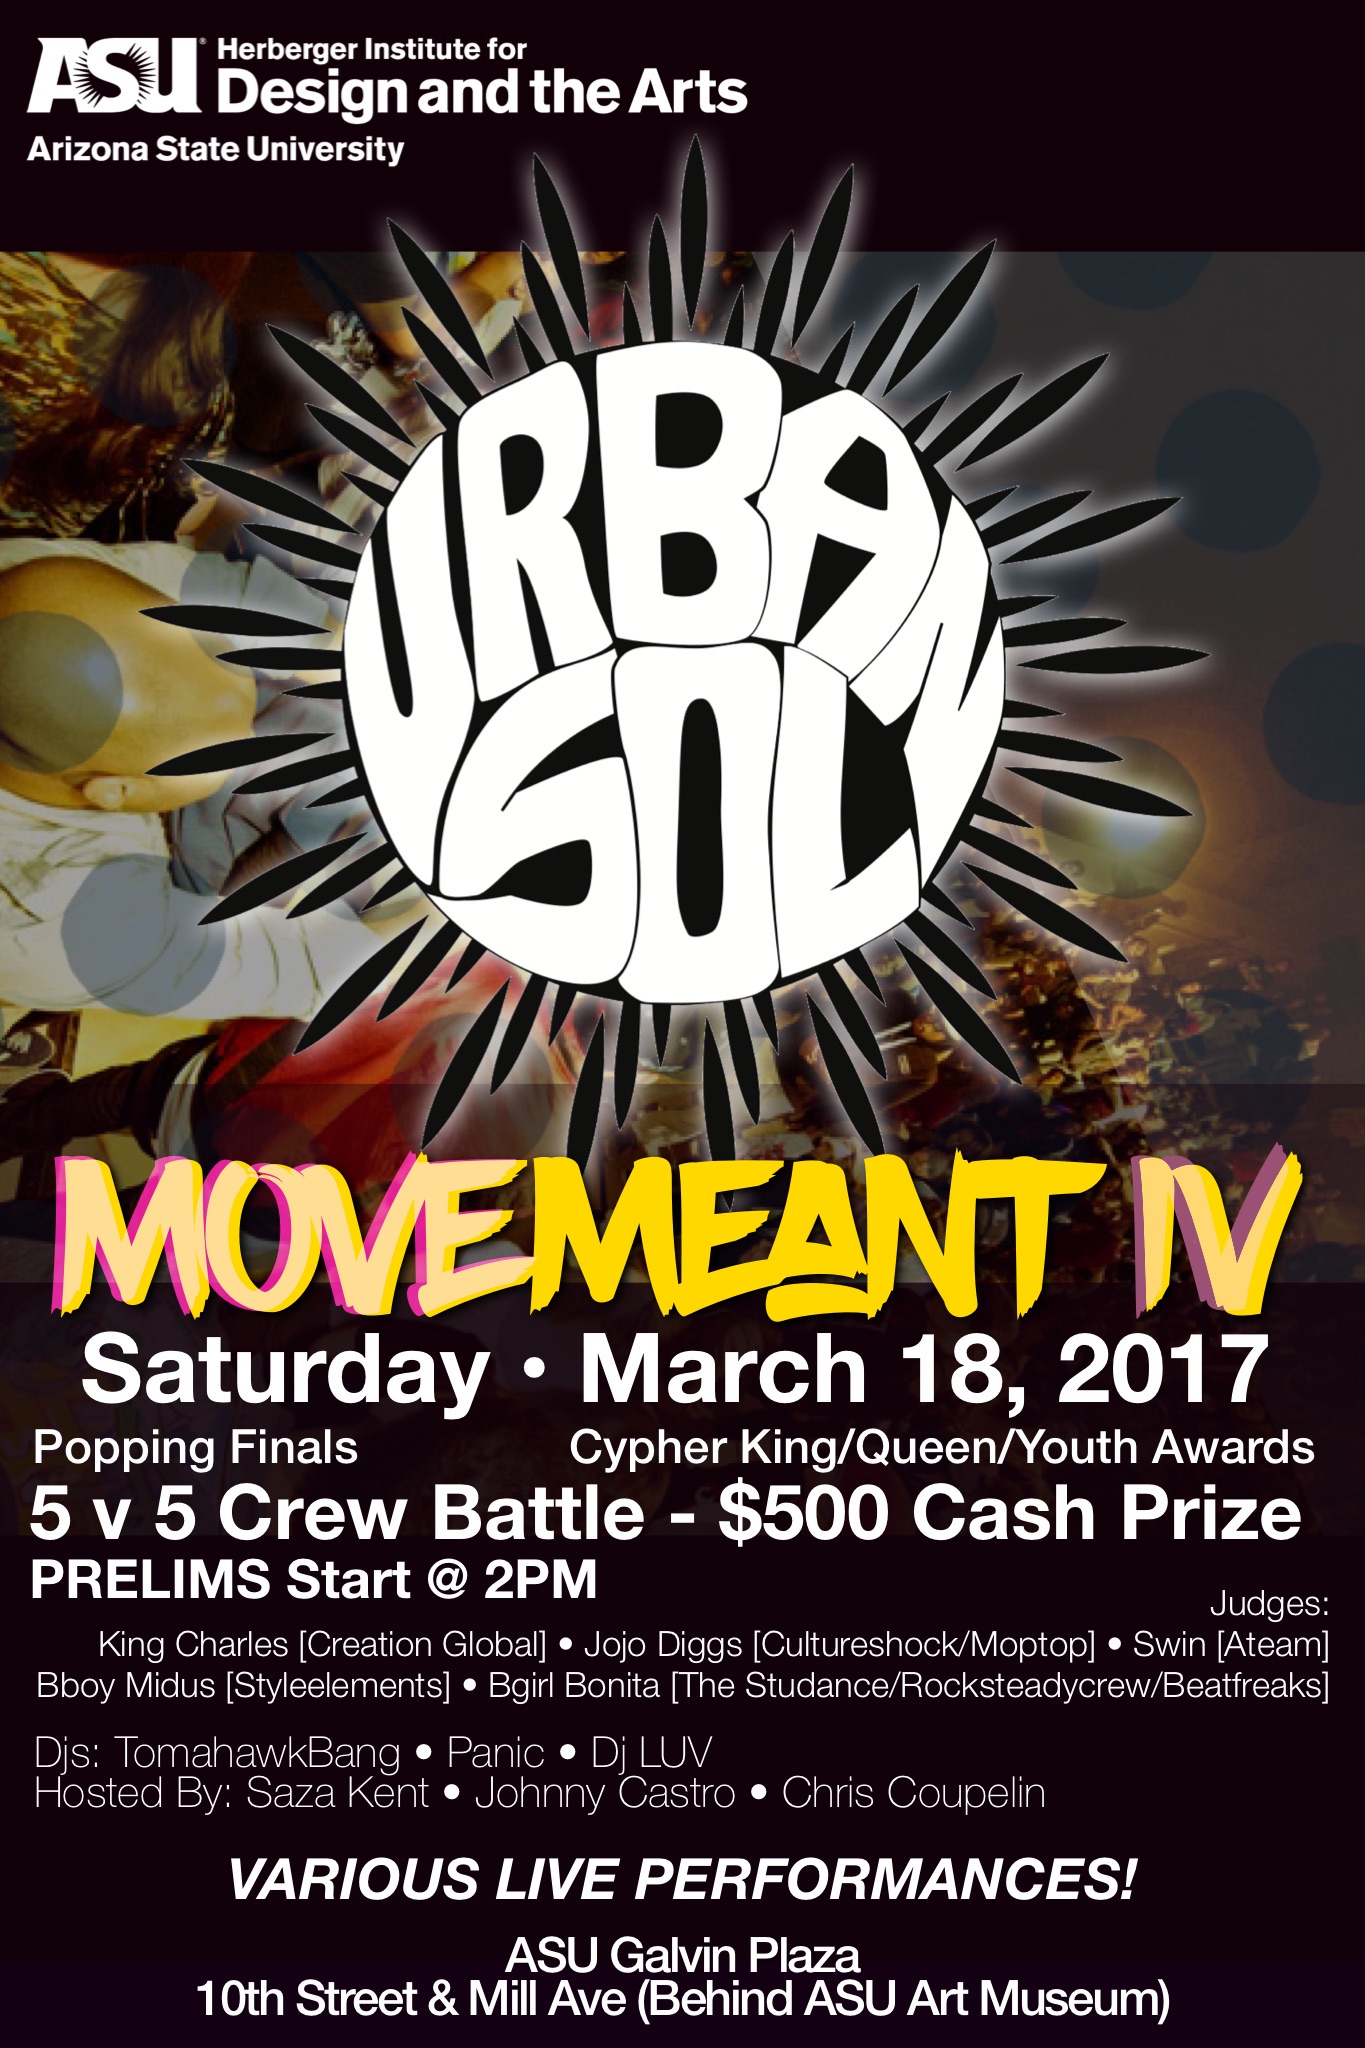 ASU Urban Sol event